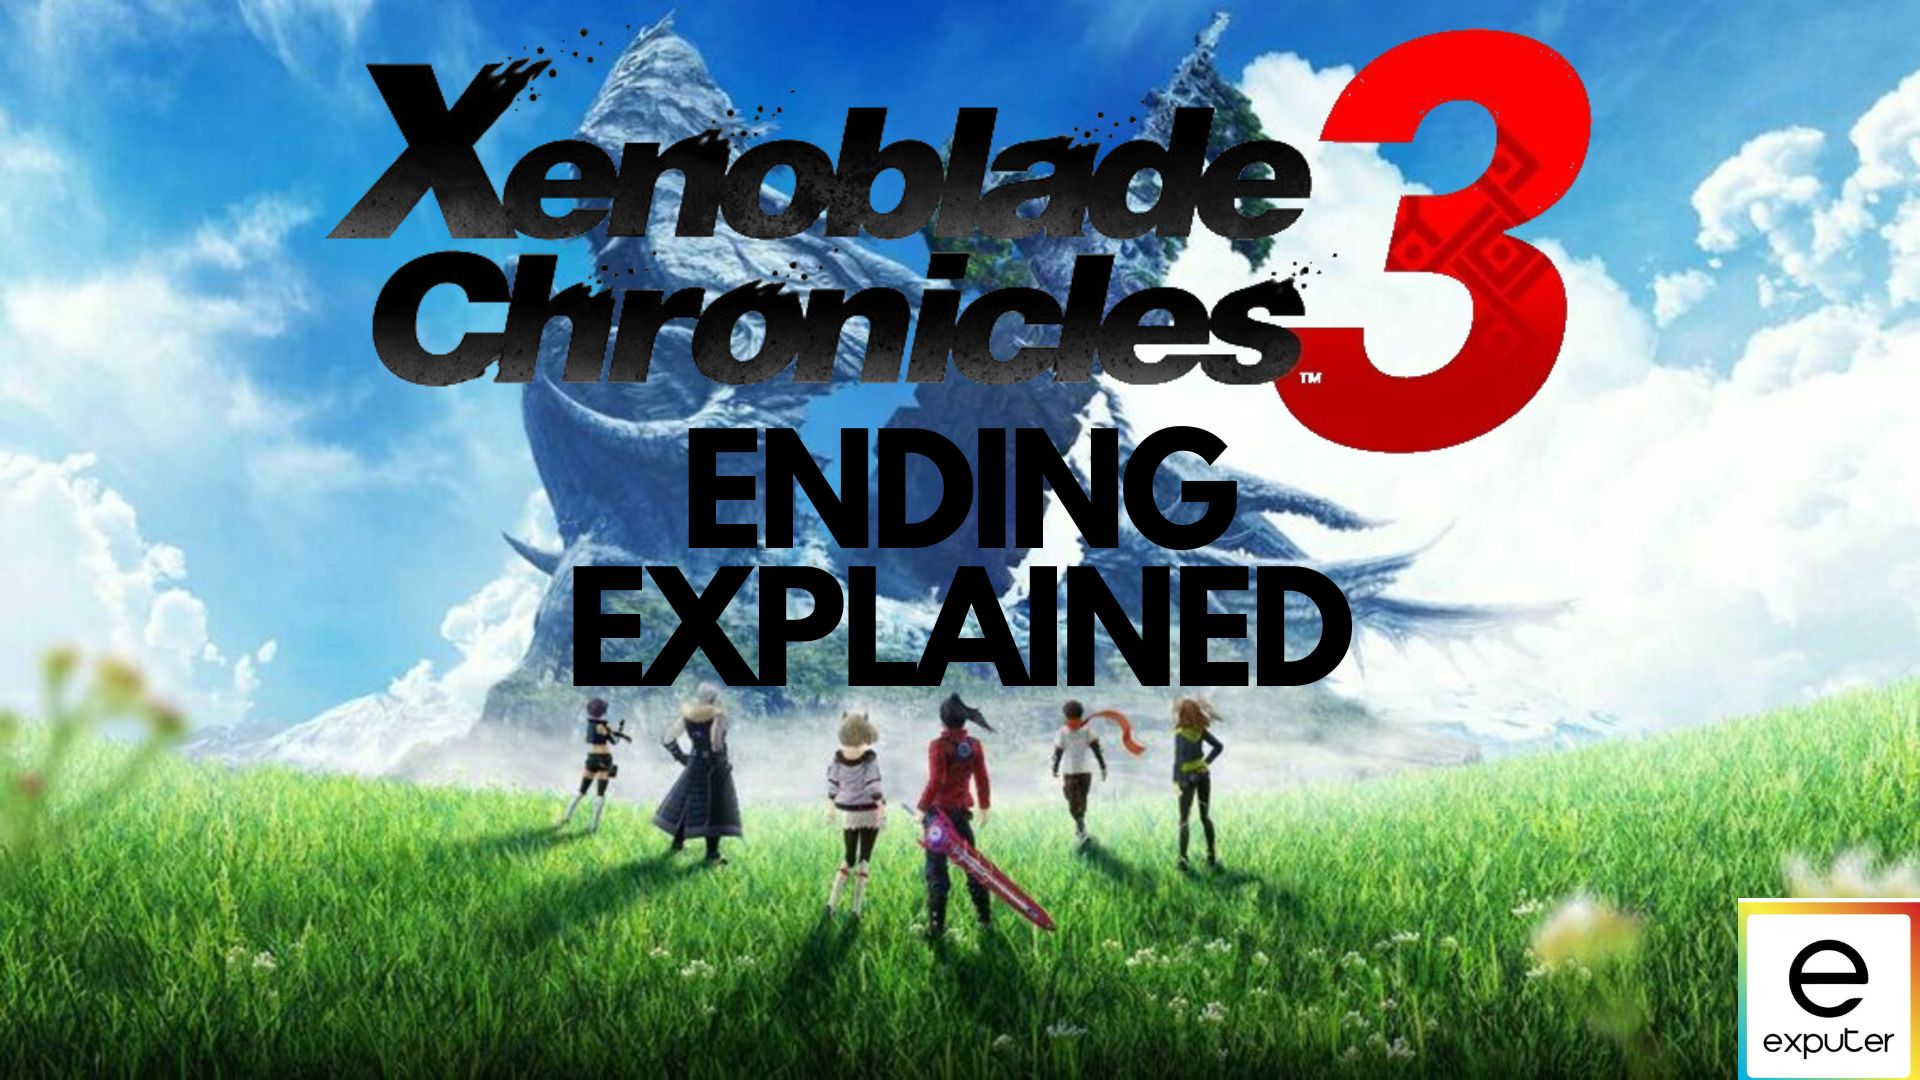 Xenoblade Chronicles 3 ending explained